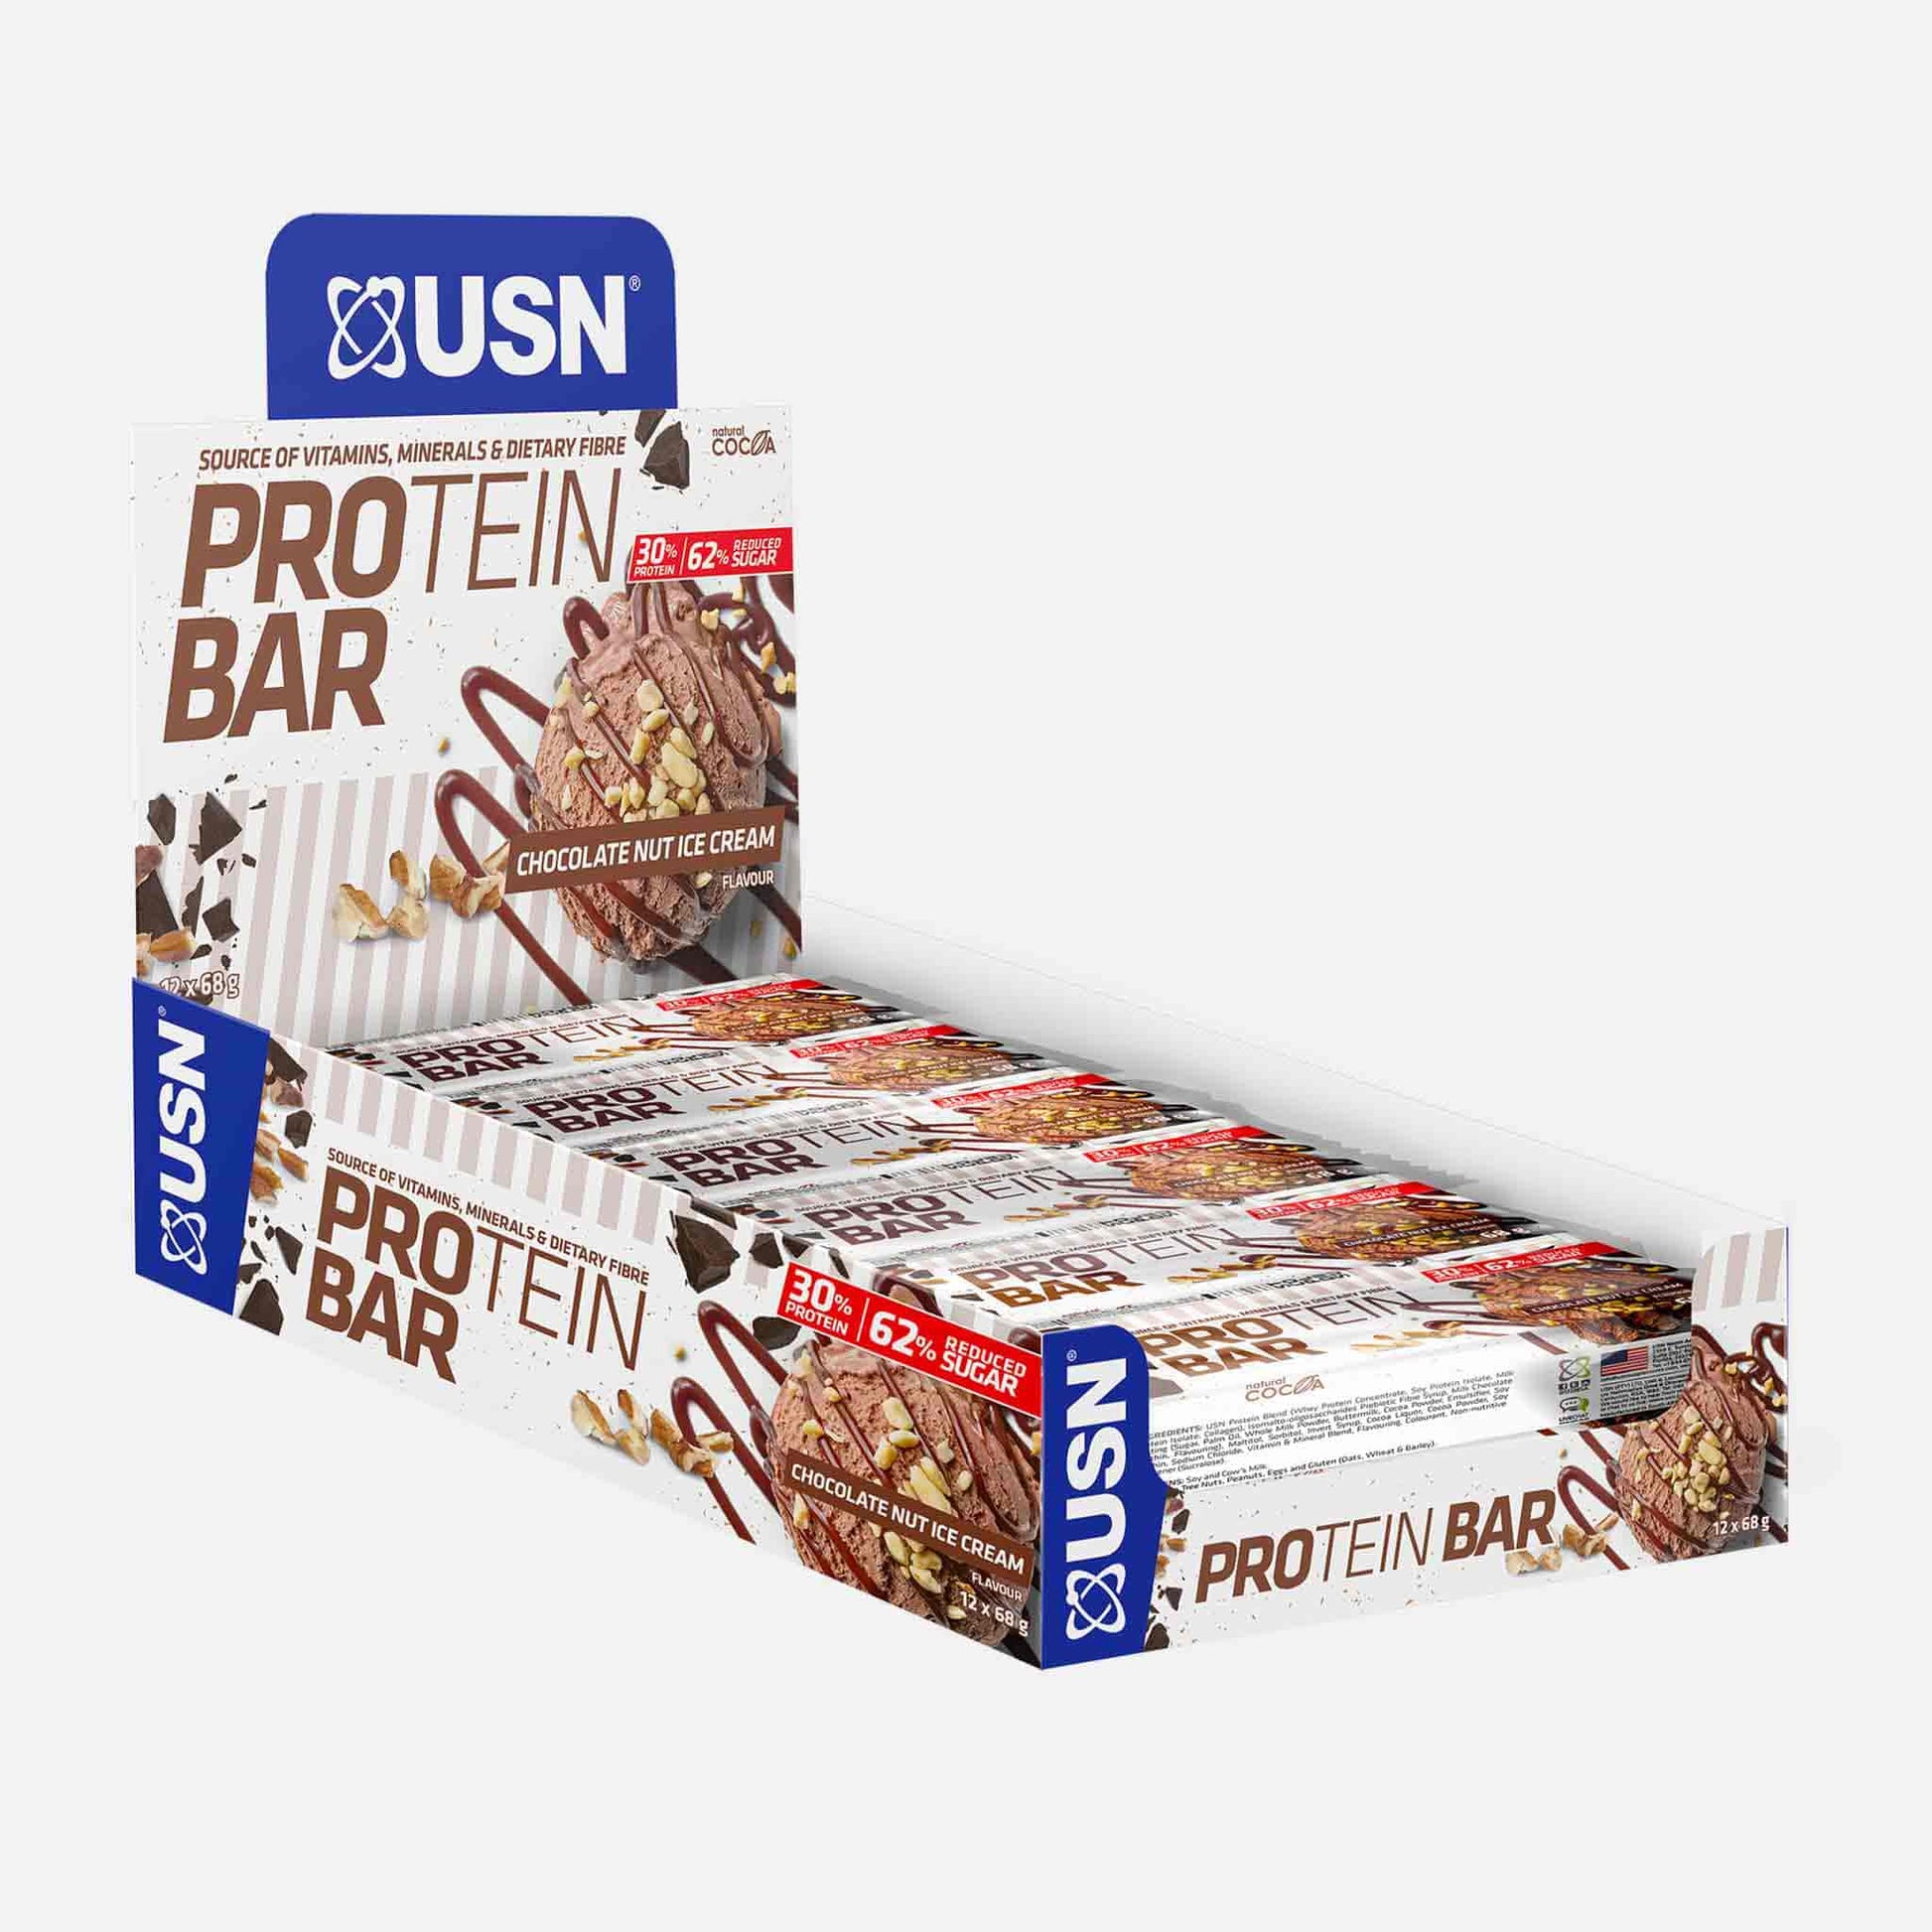     usn-protein-bar-12x68g-chocolate-nut